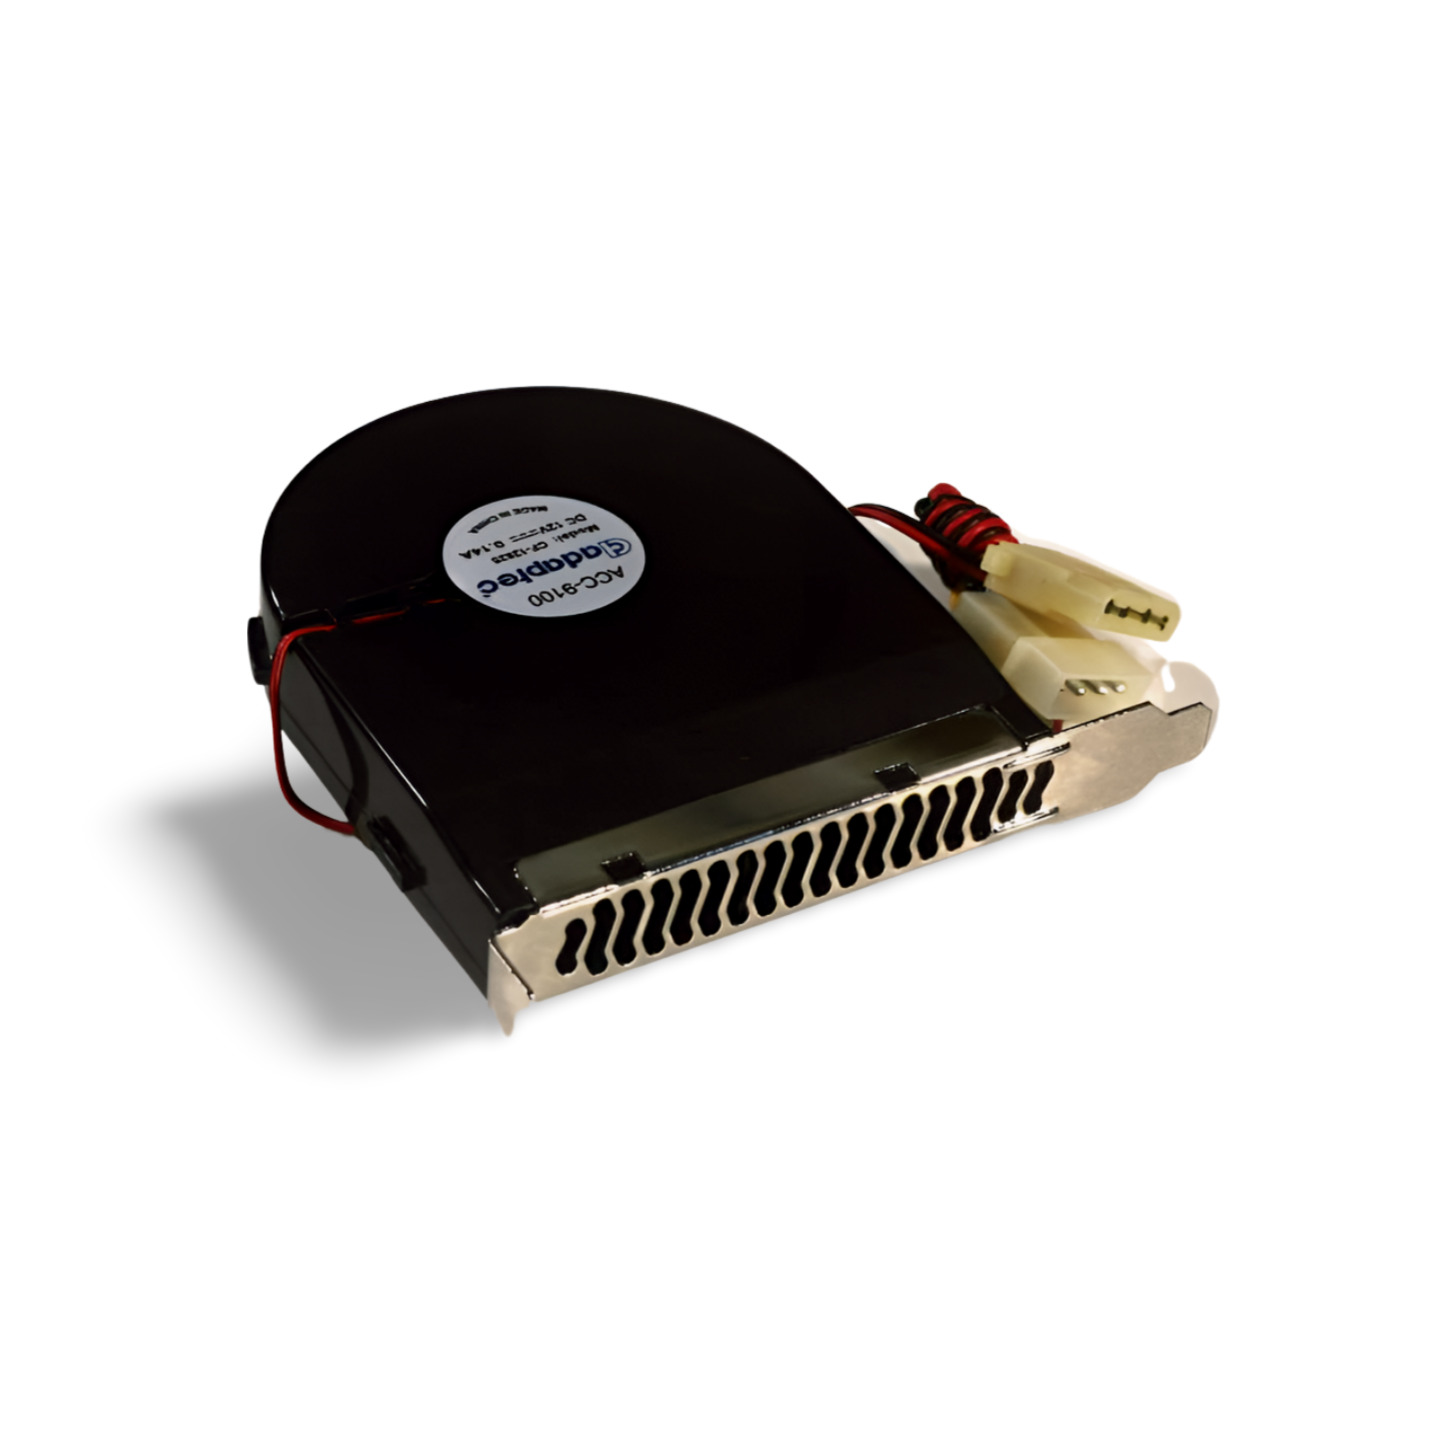 Case Slot Cooling Fan PCI Mounted Blower System Cooler - Black